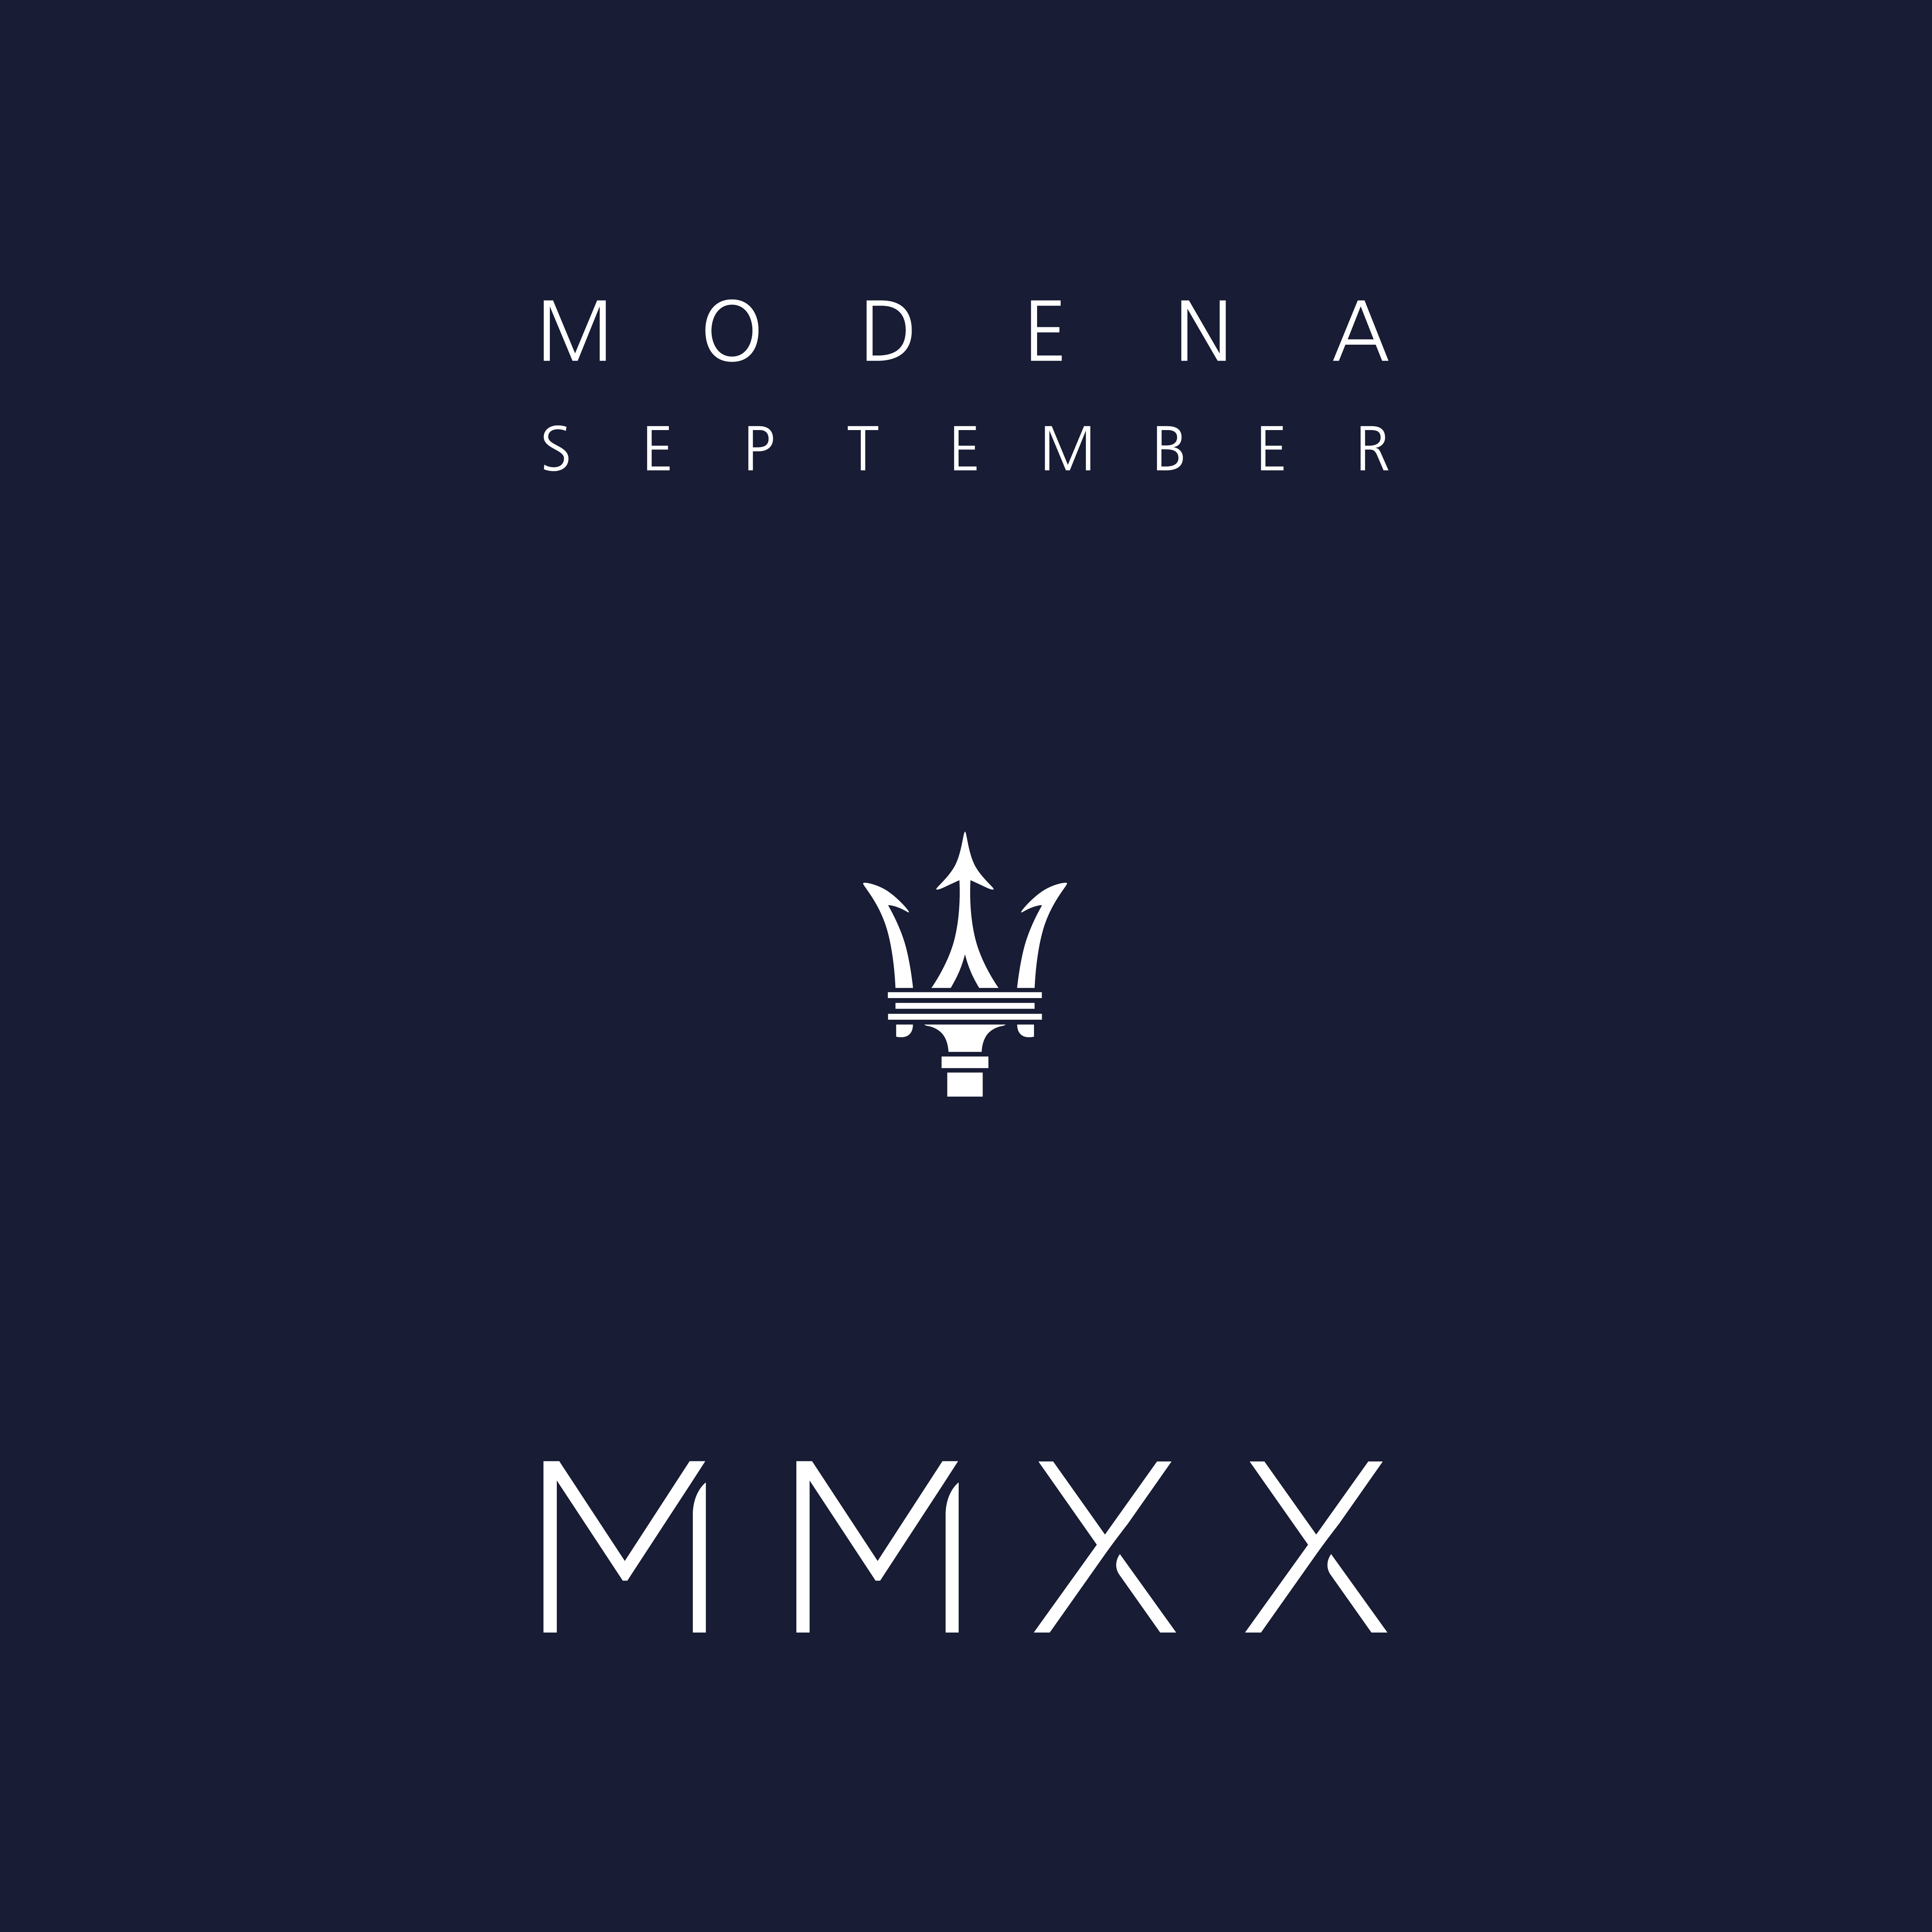 02_MMXX_Modena September 2020